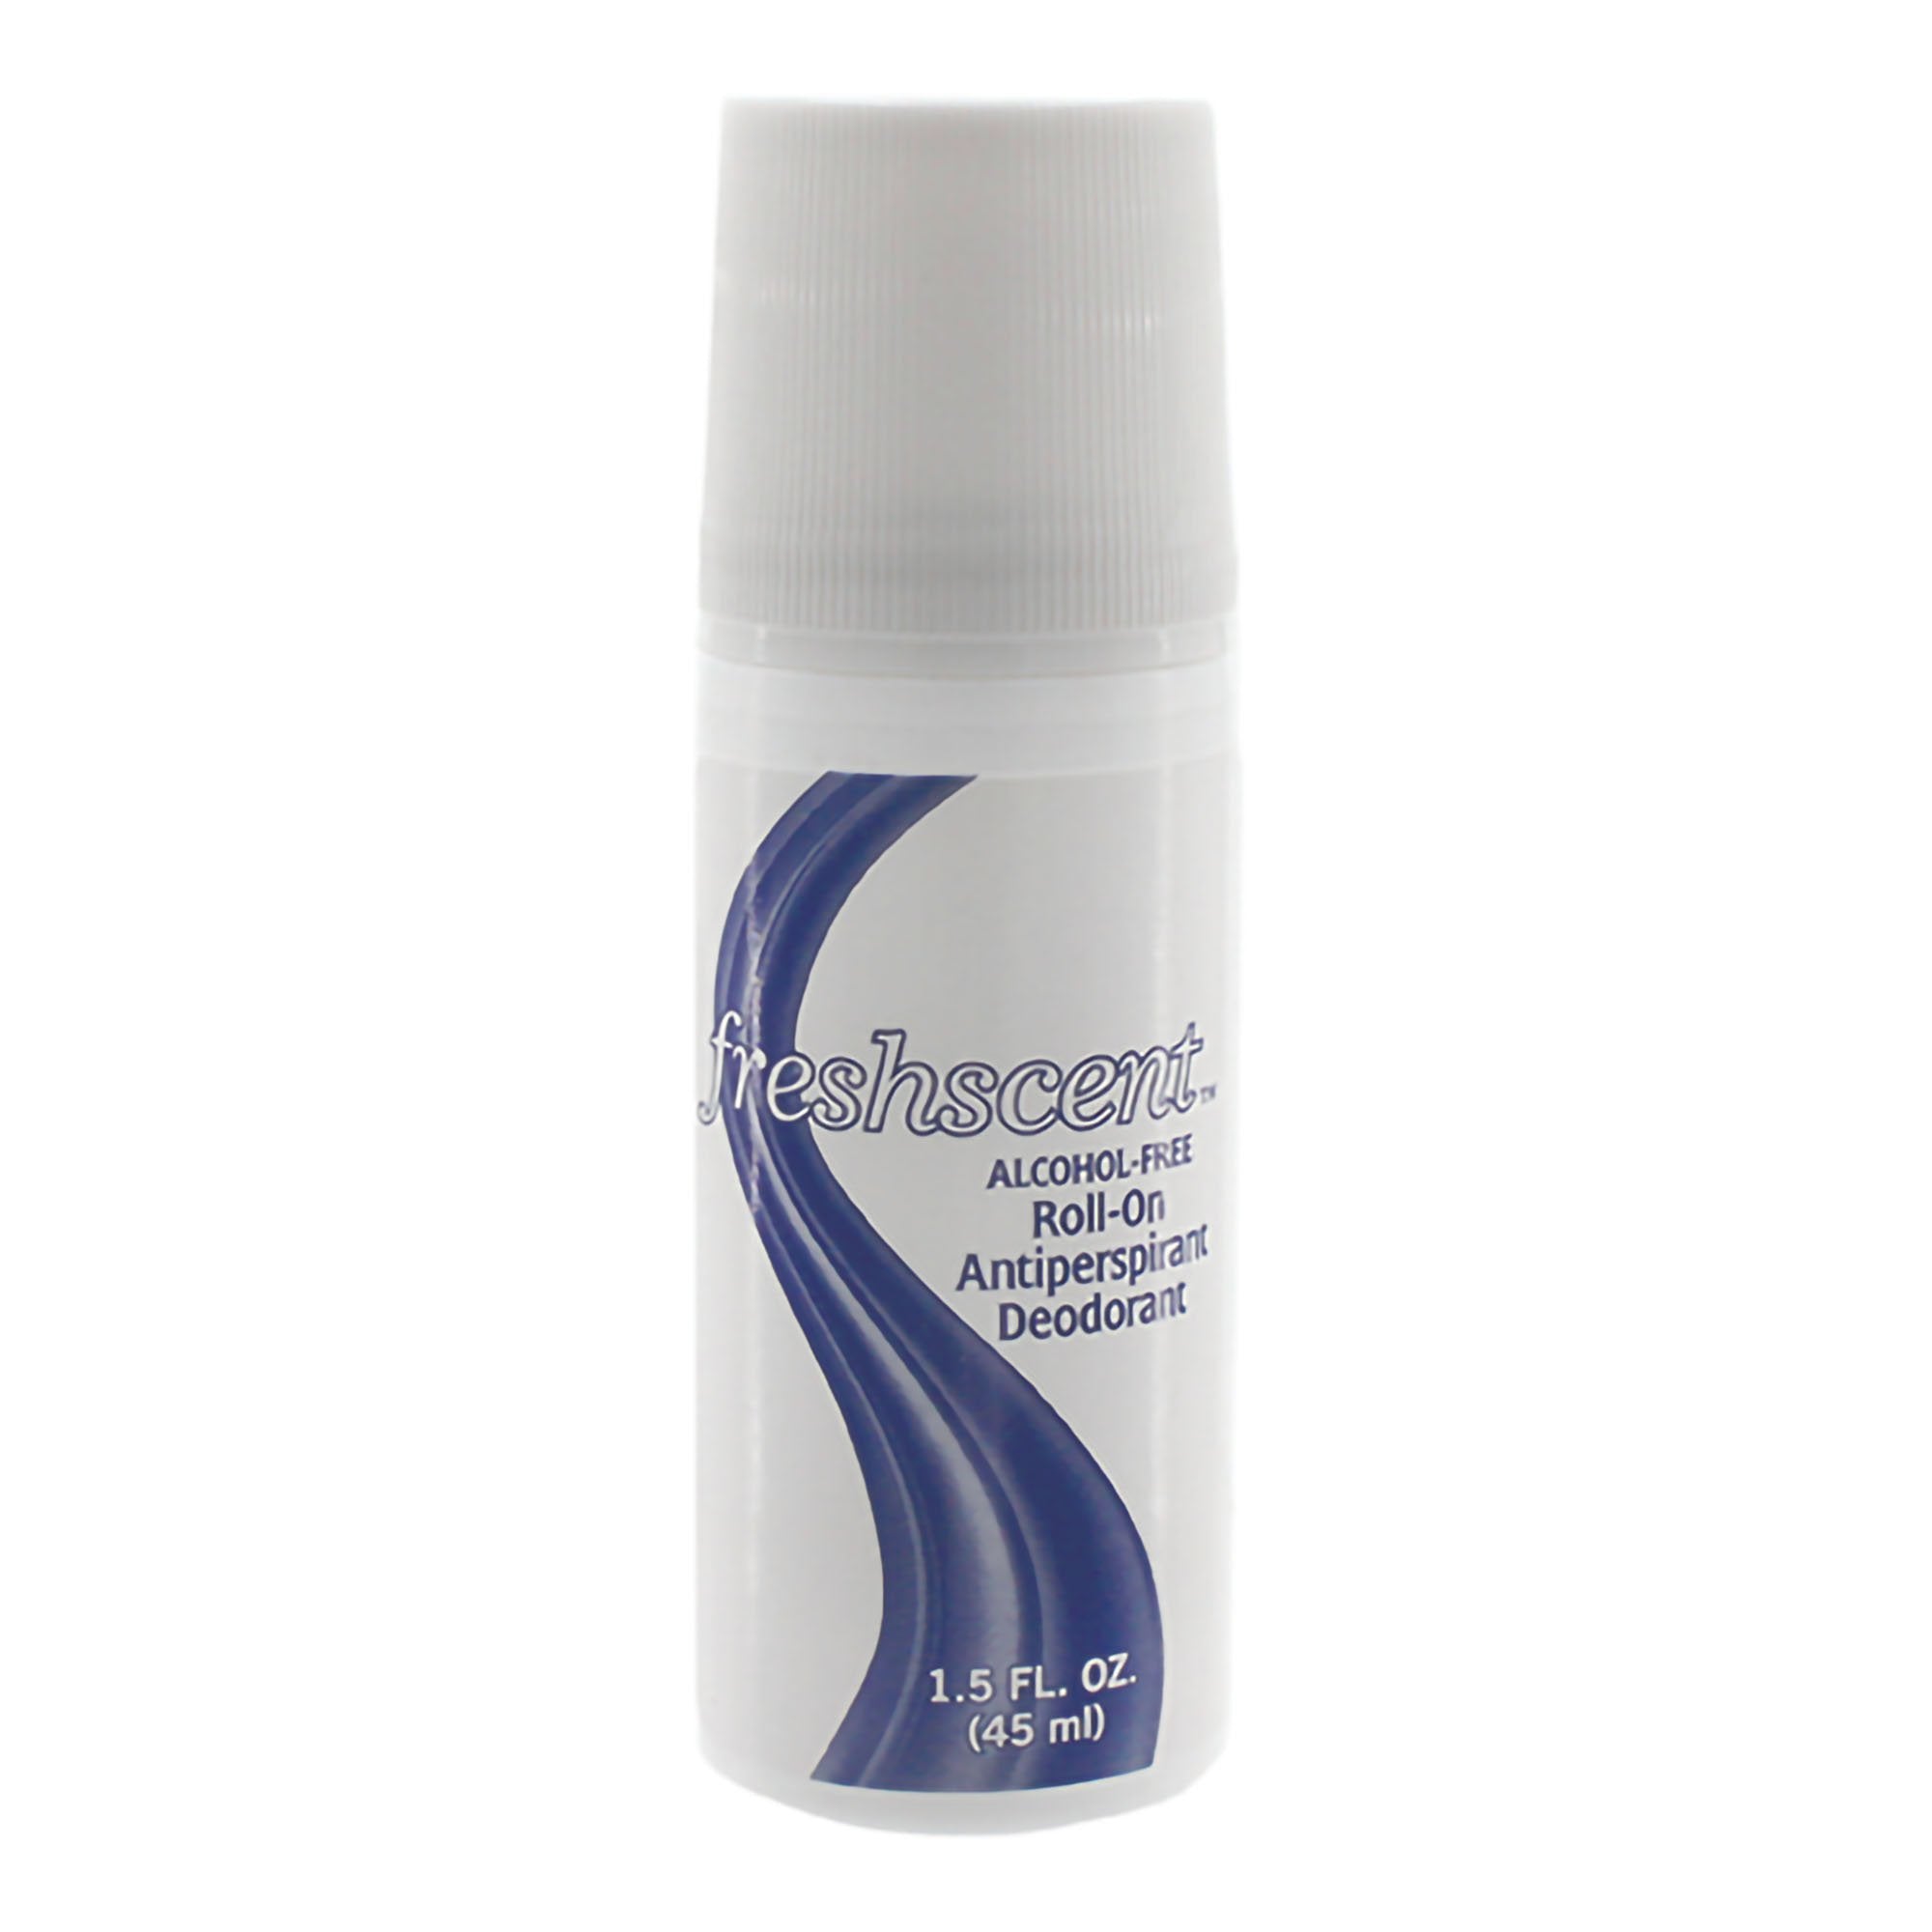 Antiperspirant / Deodorant Freshscent™ Roll-On 1.5 oz. Unscented